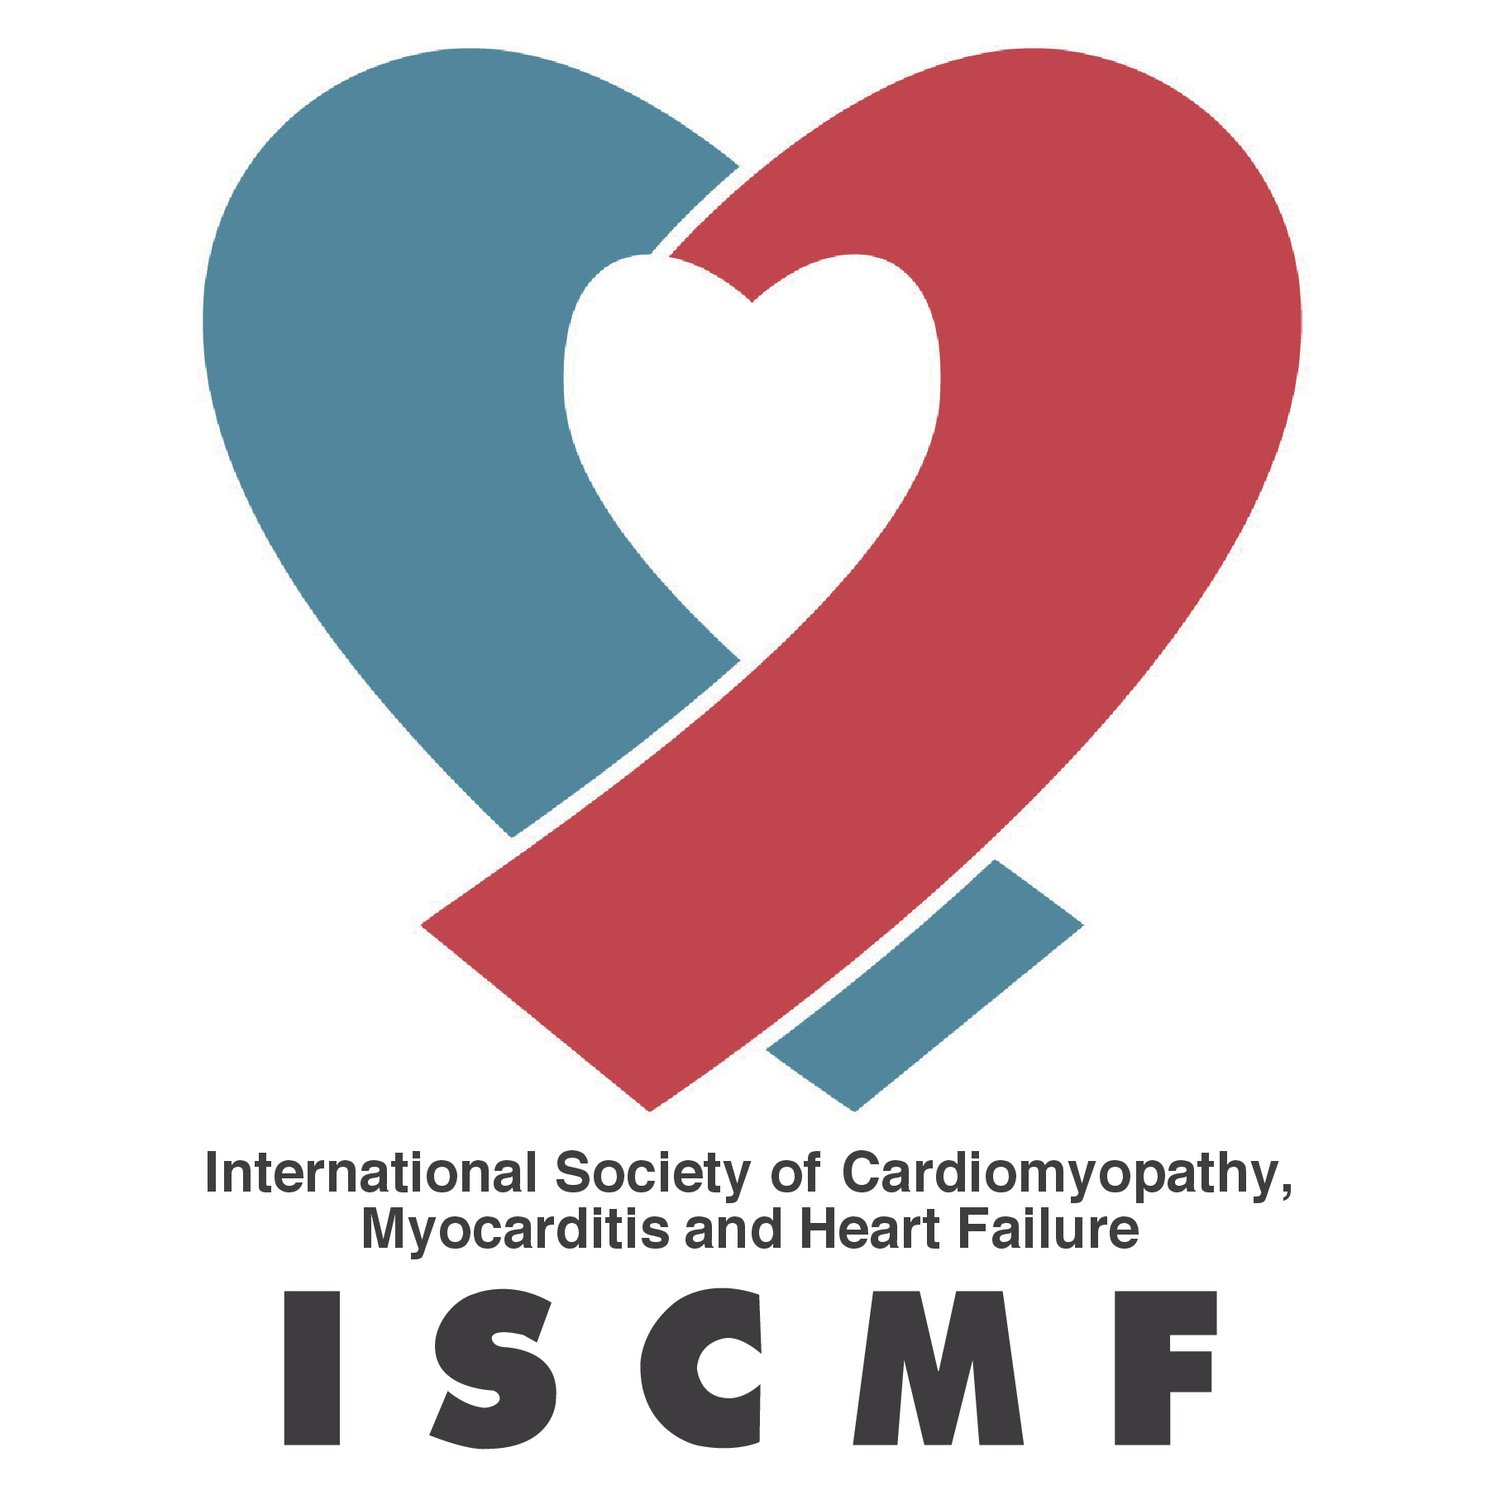 International Society of Cardiomyopathy, Myocarditis and Heart Failure